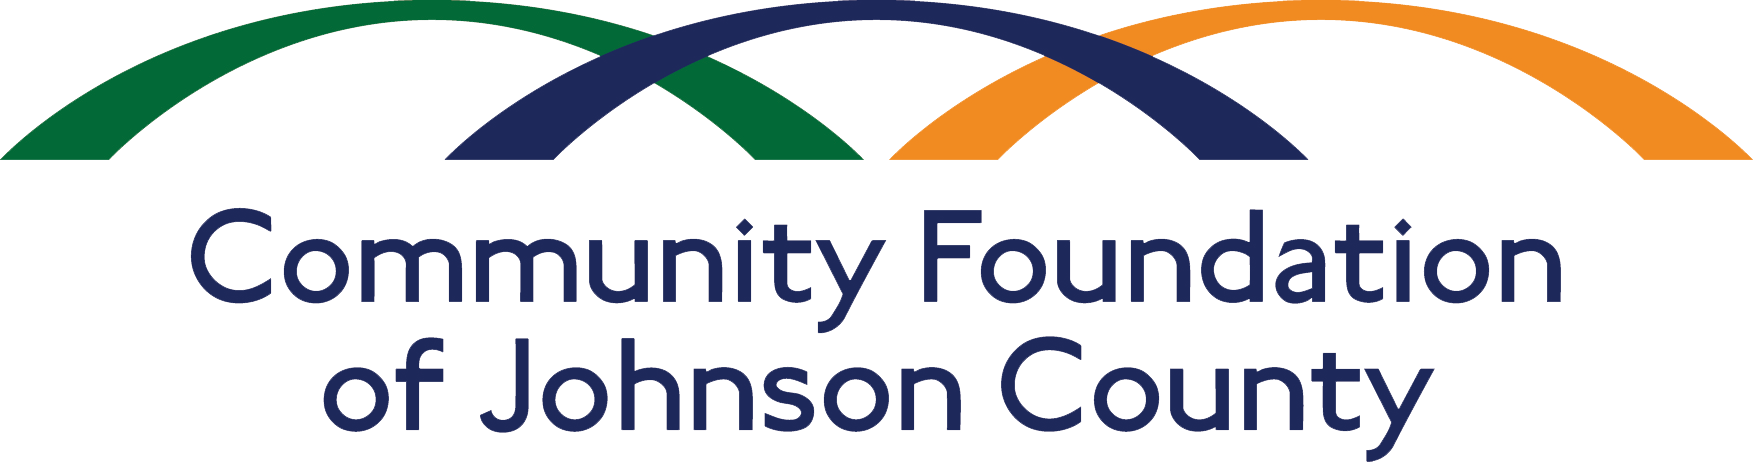 Community Foundation of Johnson County logo